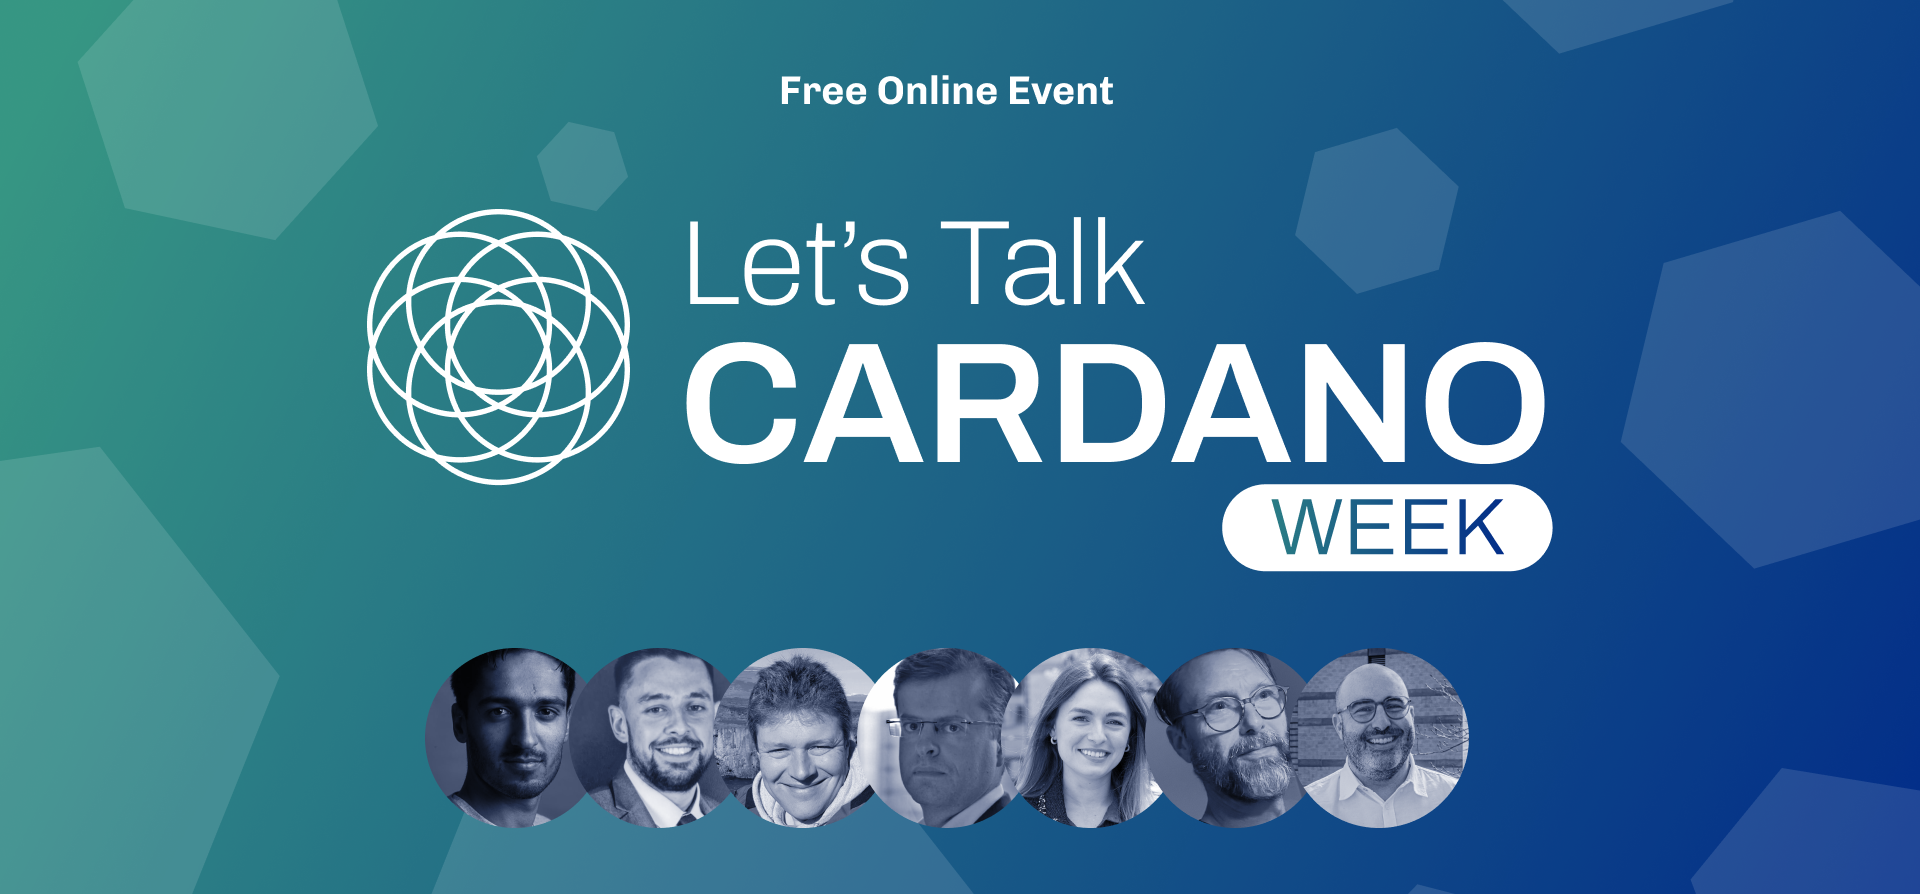 Let's Talk Cardano Week - Webinar series by the Cardano Foundation